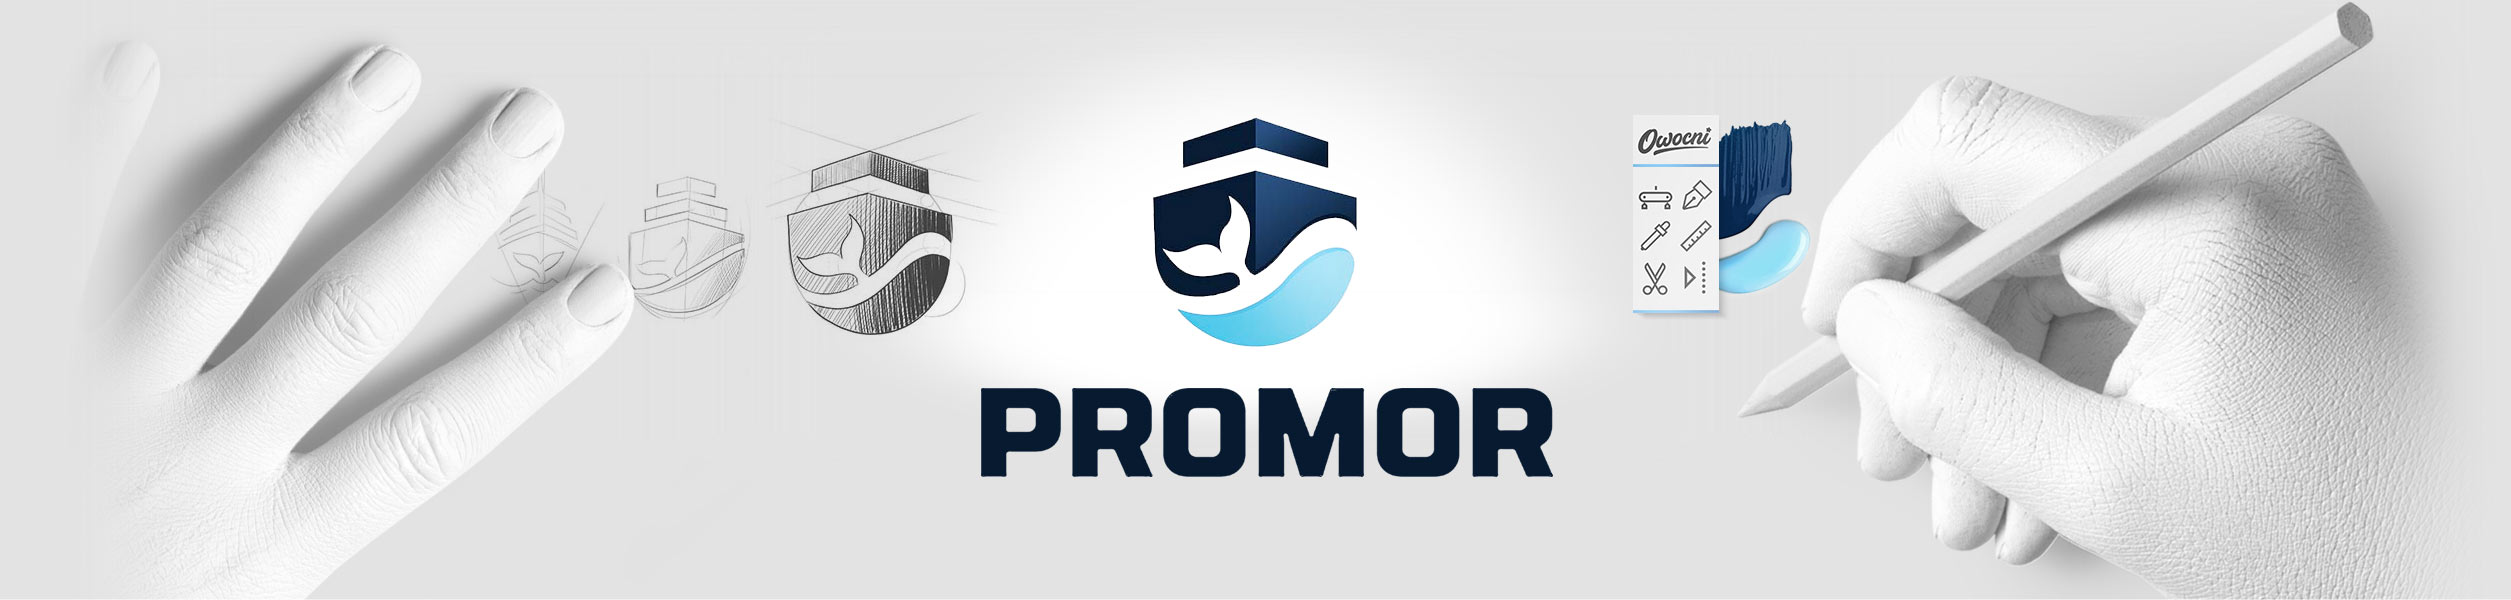 Projekt logo Promor